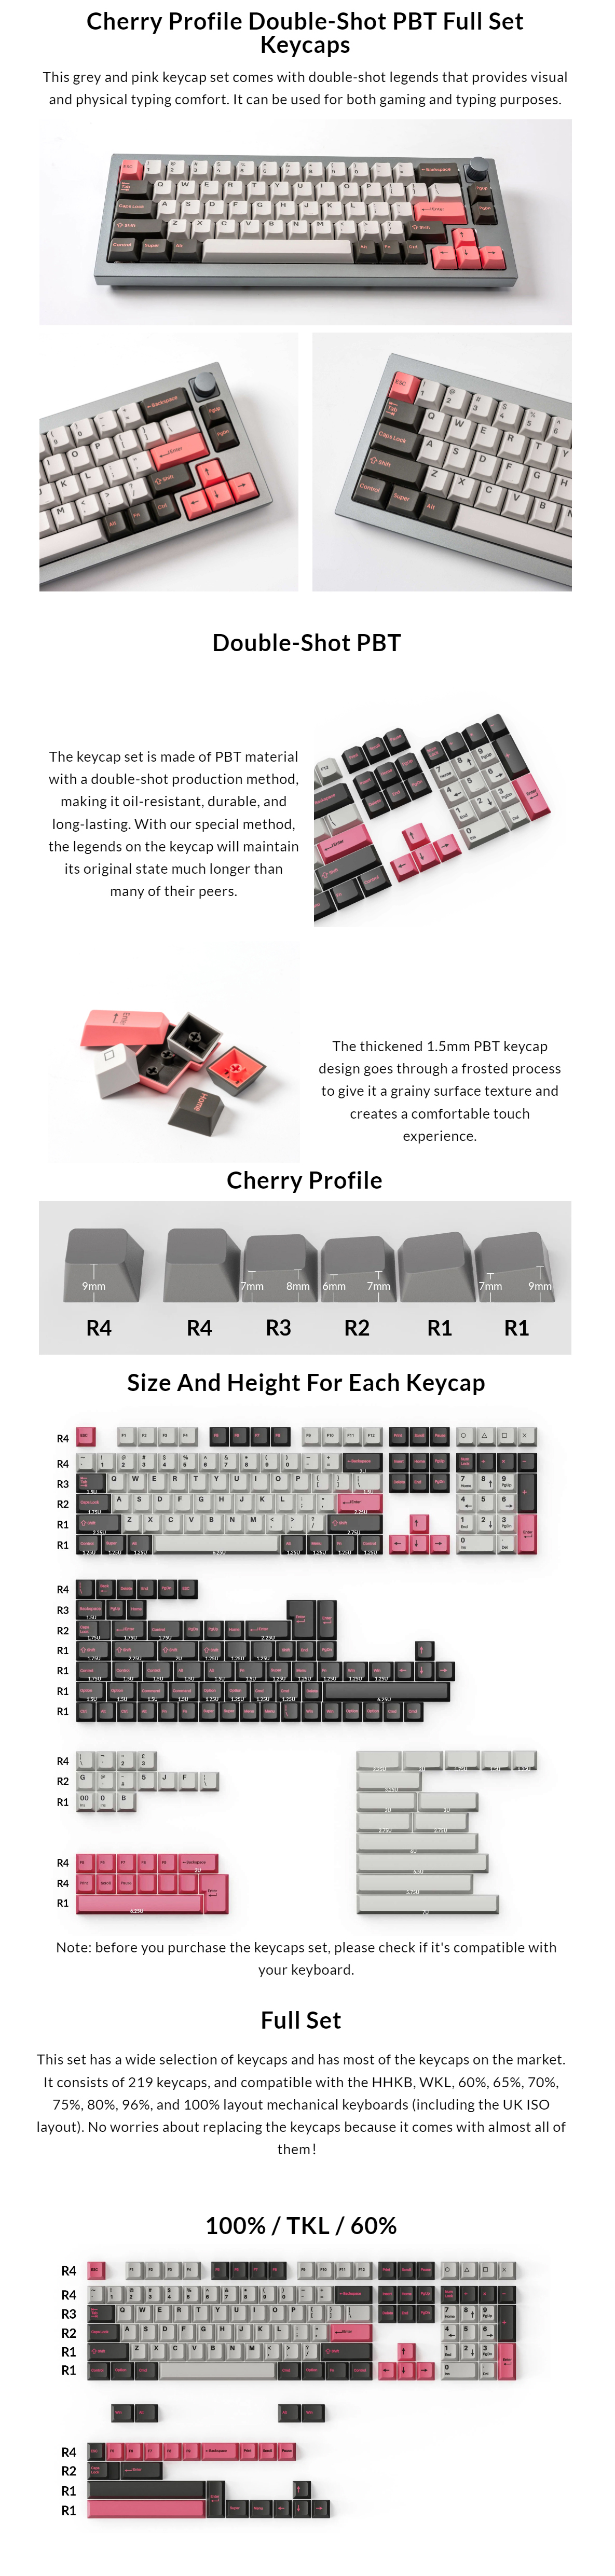 Keyboards-Keychron-Cherry-Profile-Double-Shot-PBT-Full-Set-Keycaps-Dolch-Pink-2